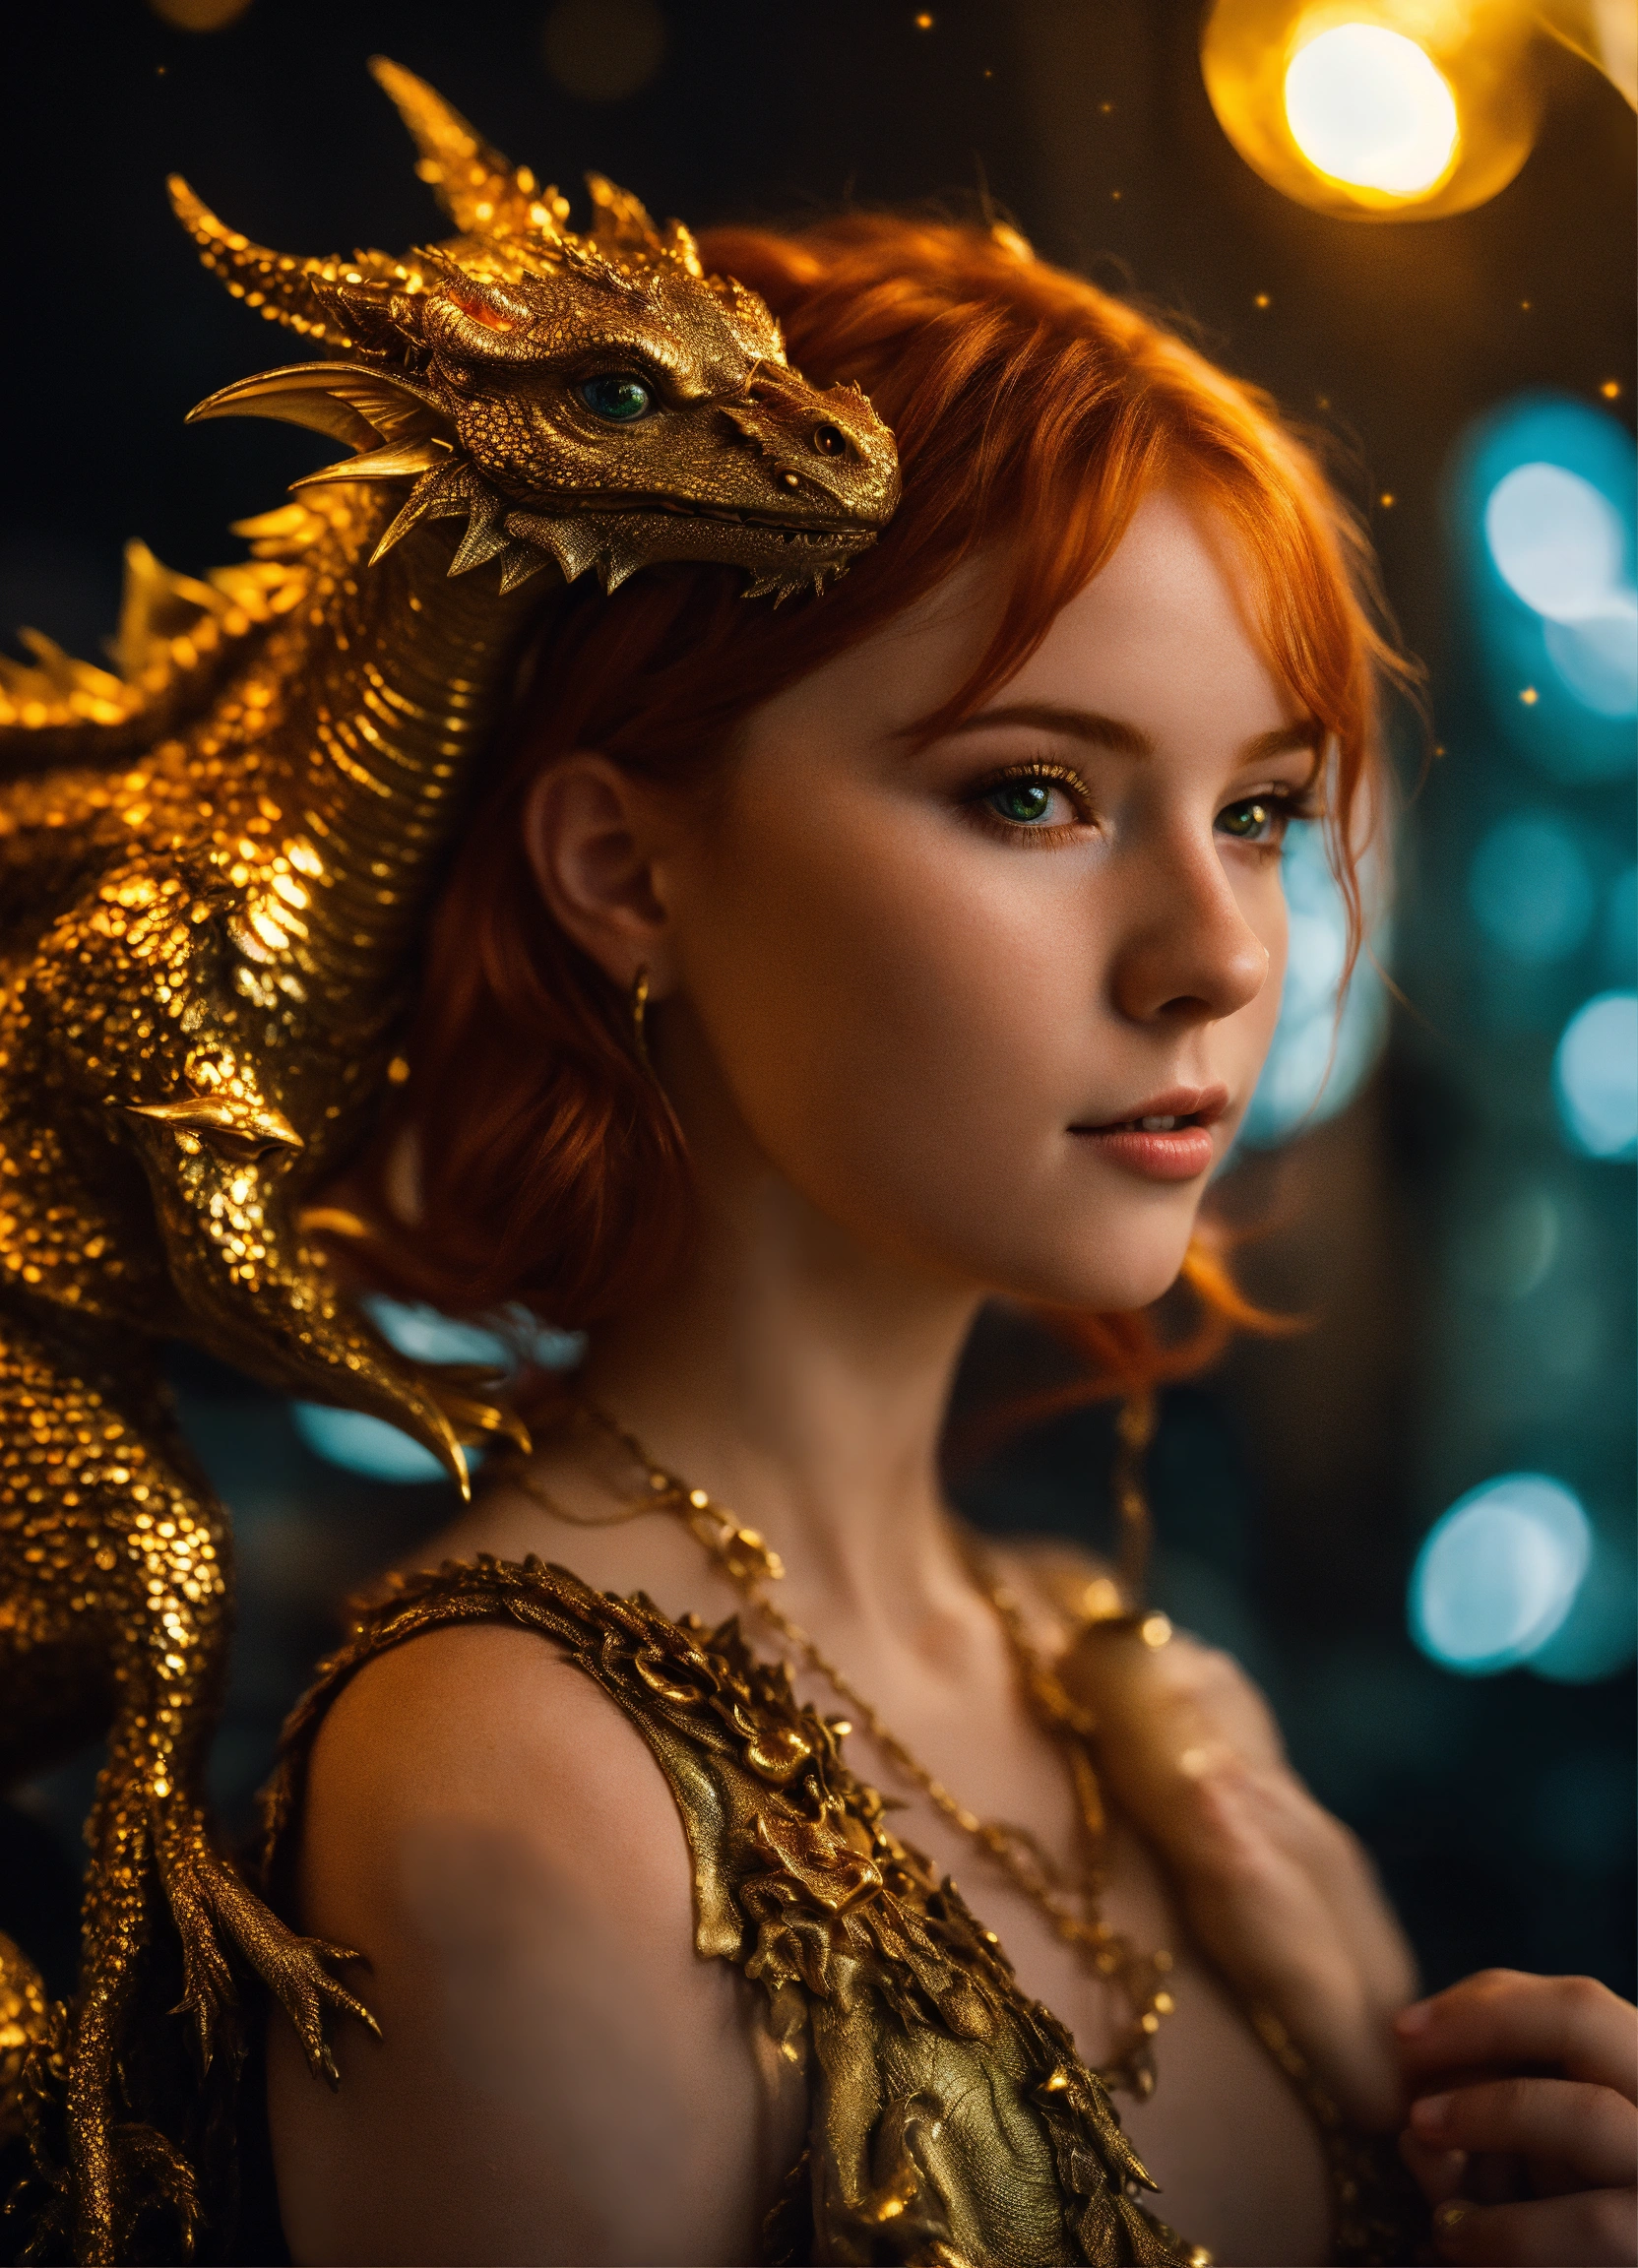 Lexica Cute Young Redhead Irish Cyberpunk Girl Holding Her Golden